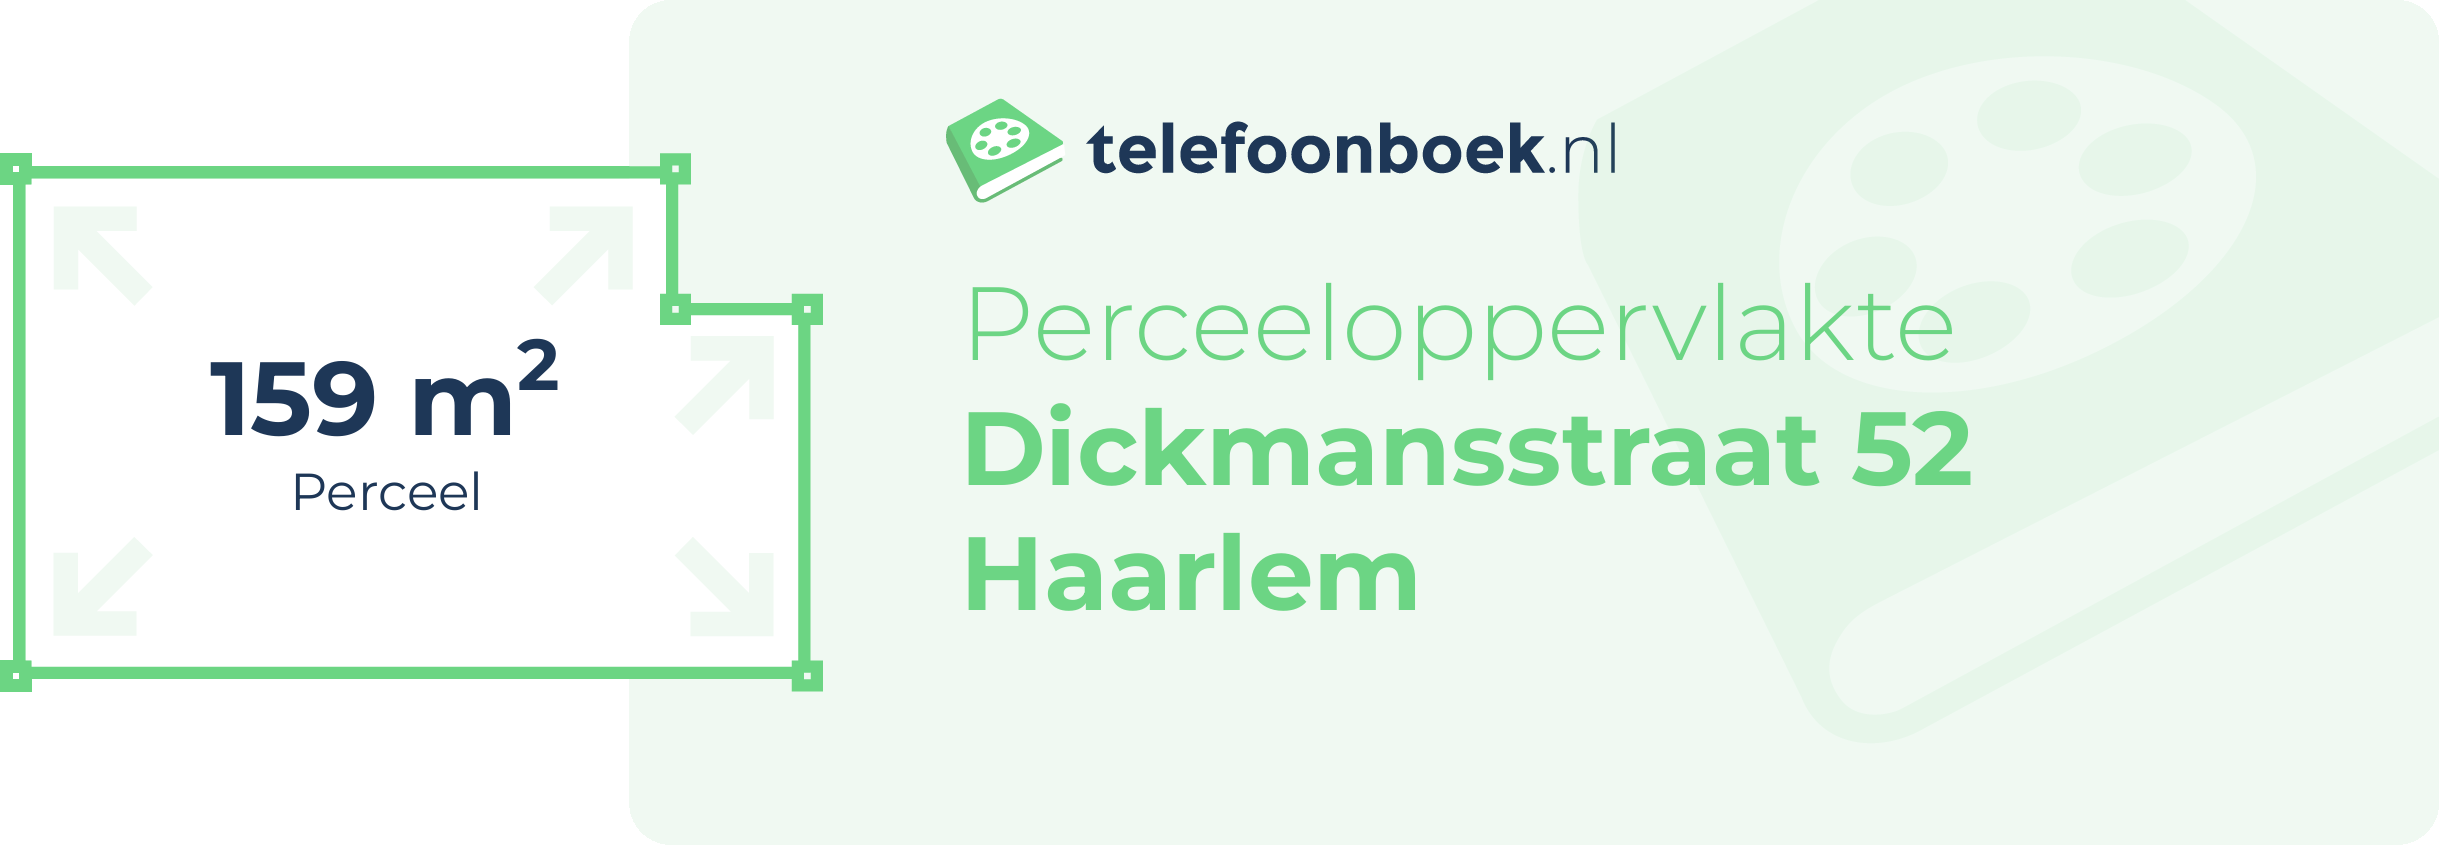 Perceeloppervlakte Dickmansstraat 52 Haarlem